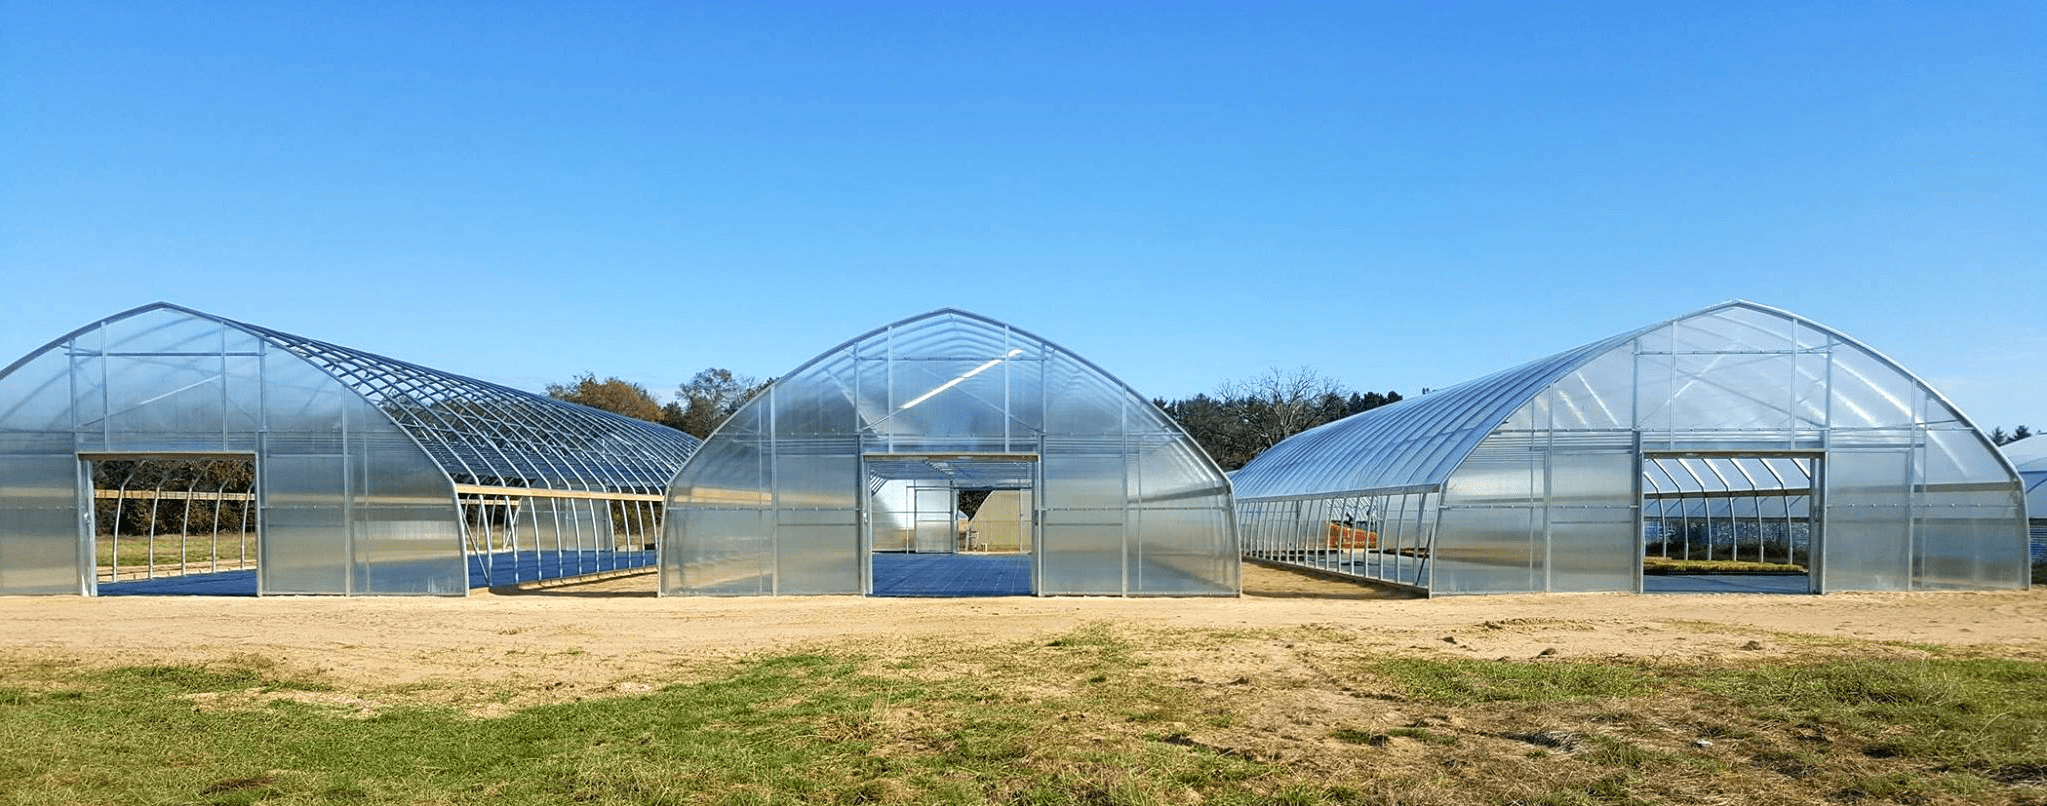 Serateknik - Greenhouse Solutions | Kelebek Havalandırma Çift Taraflı